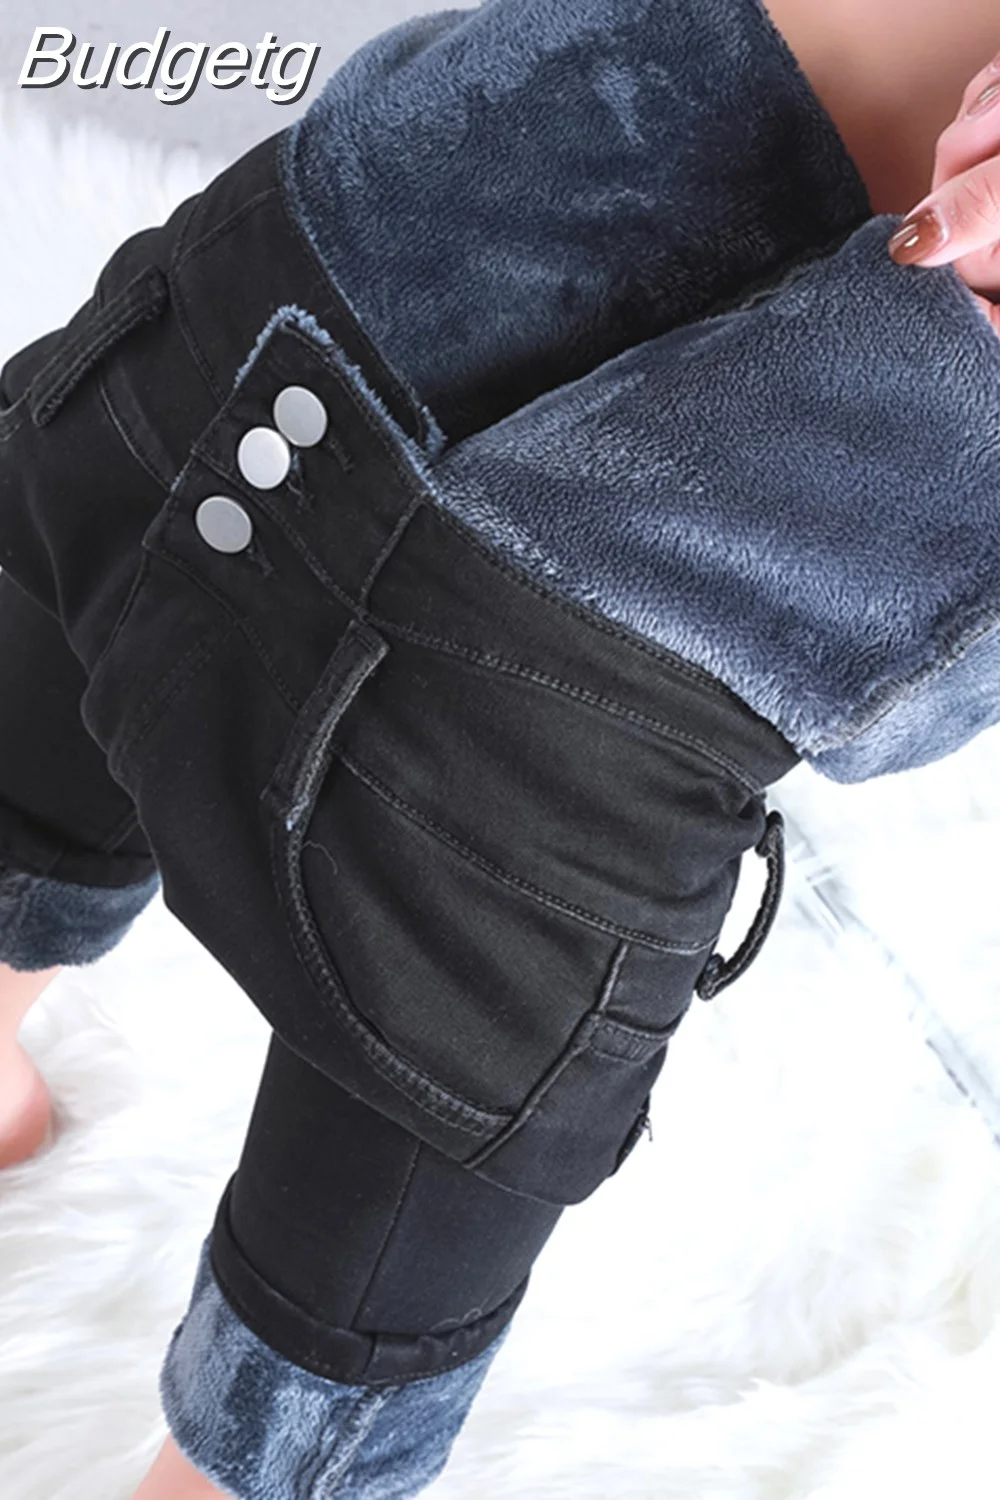 Budgetg 2023 Winter Thick Fleece Women's Jeans Skinny Elastic Fleece Warm Slim Fit Stretch Ladies Casual Denim Pencil Pants 650g